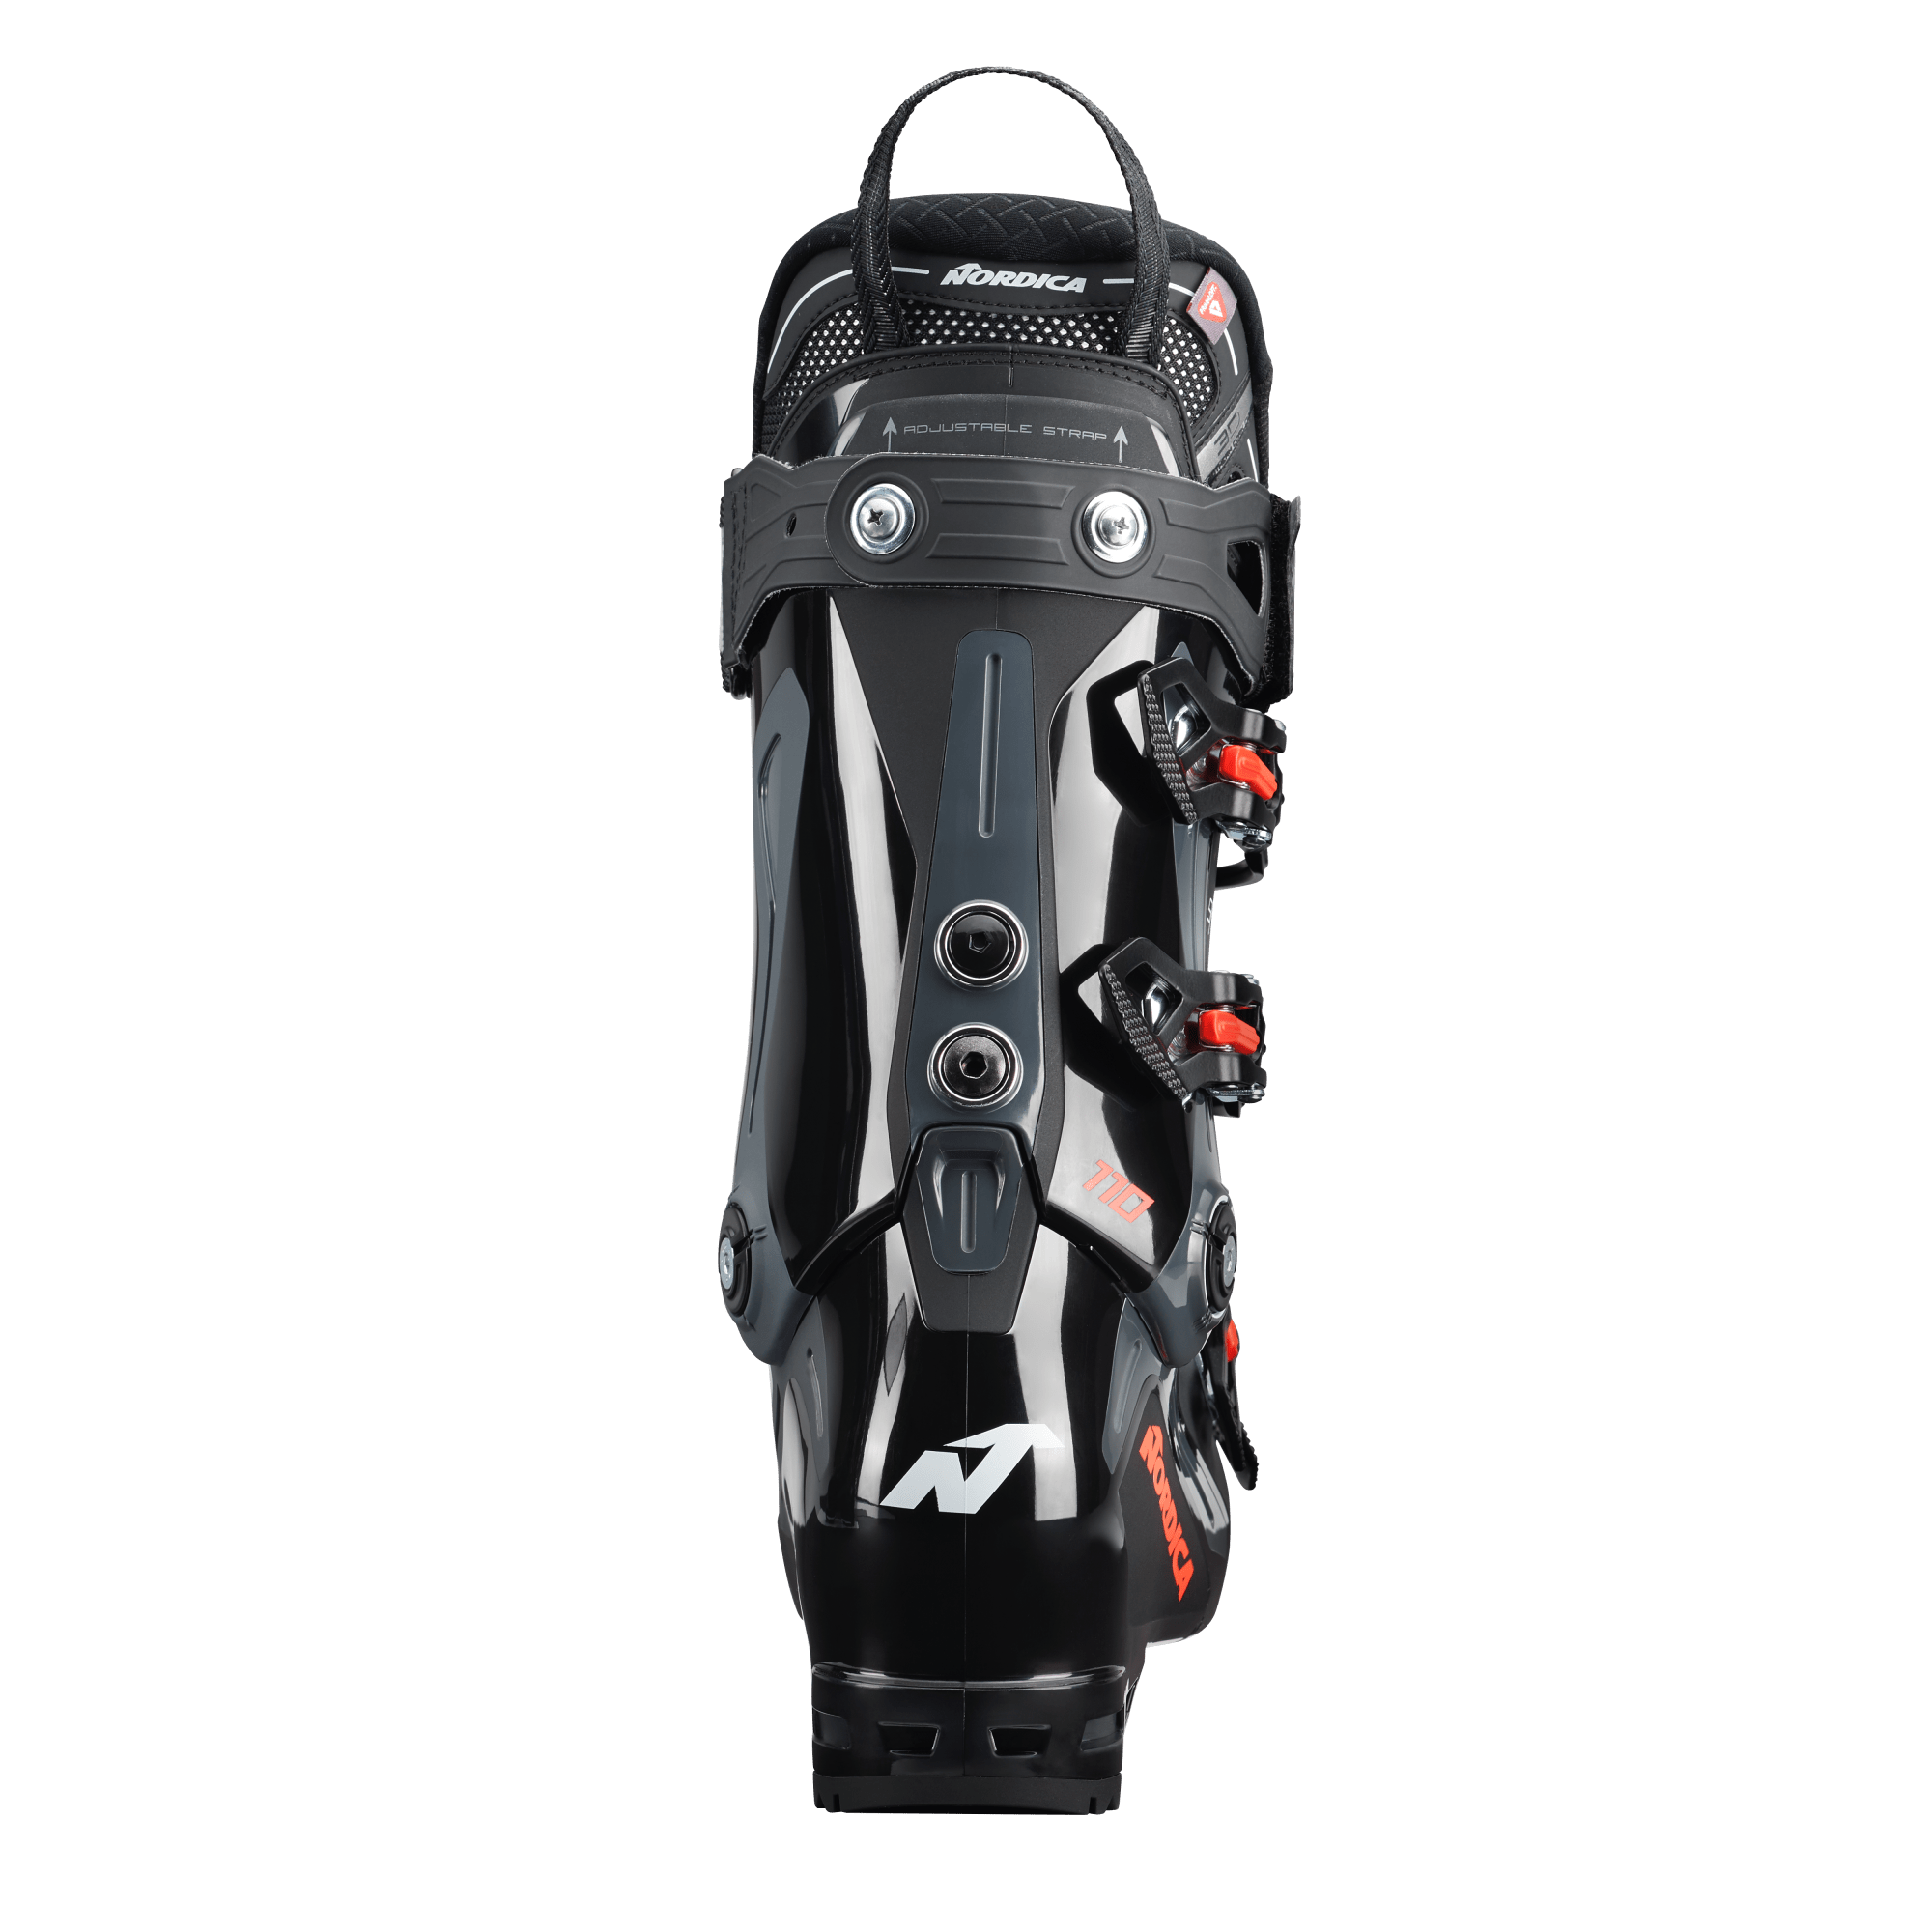 Nordica Speedmachine 3 110 GW Boots M | Lagazoi Shop | BOTËGHES LAGAZOI